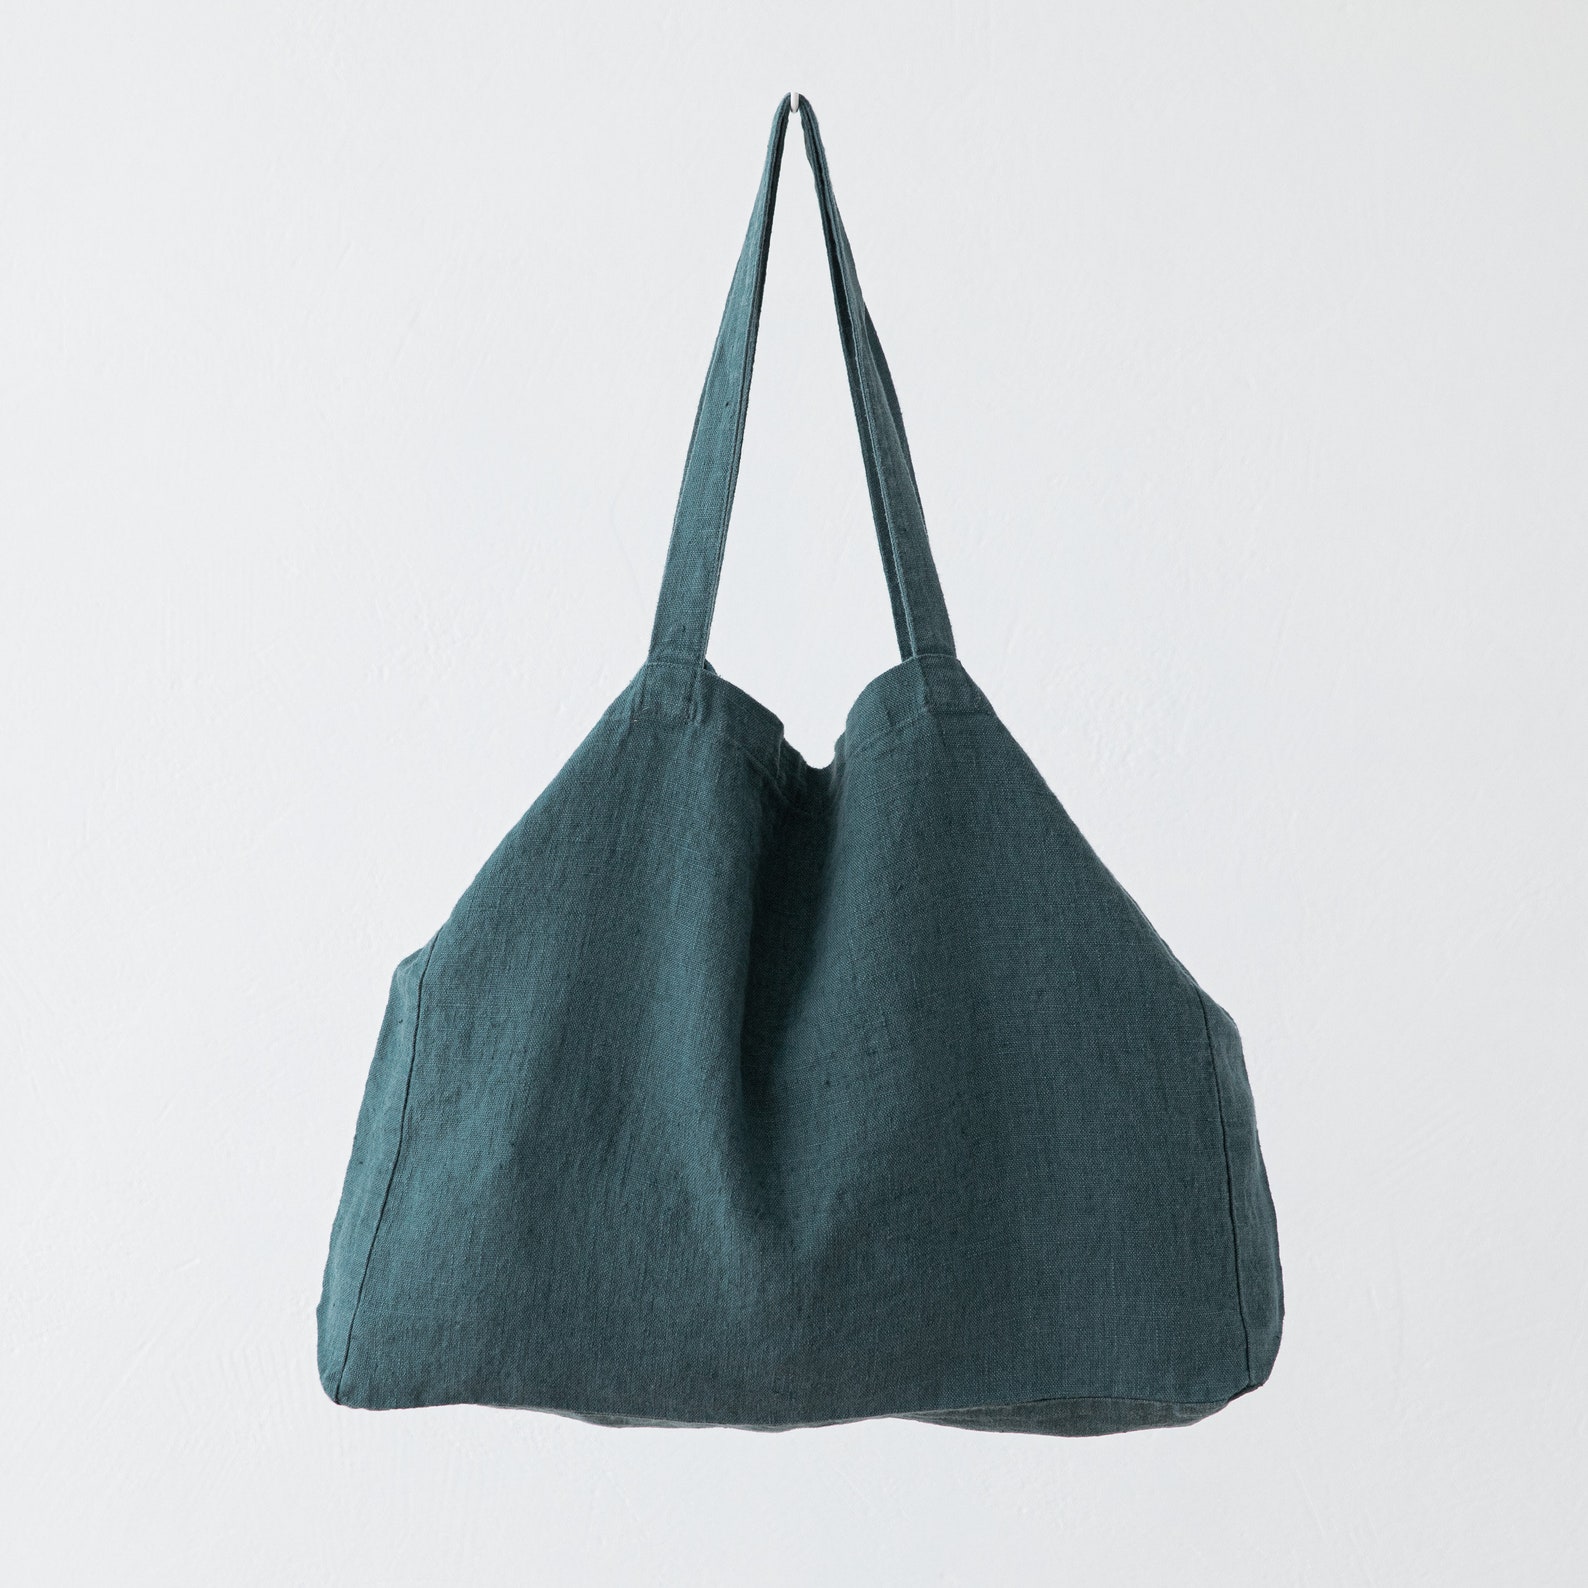 Heavy Linen Bag in Various Colors Linen Market Bag Linen | Etsy Australia